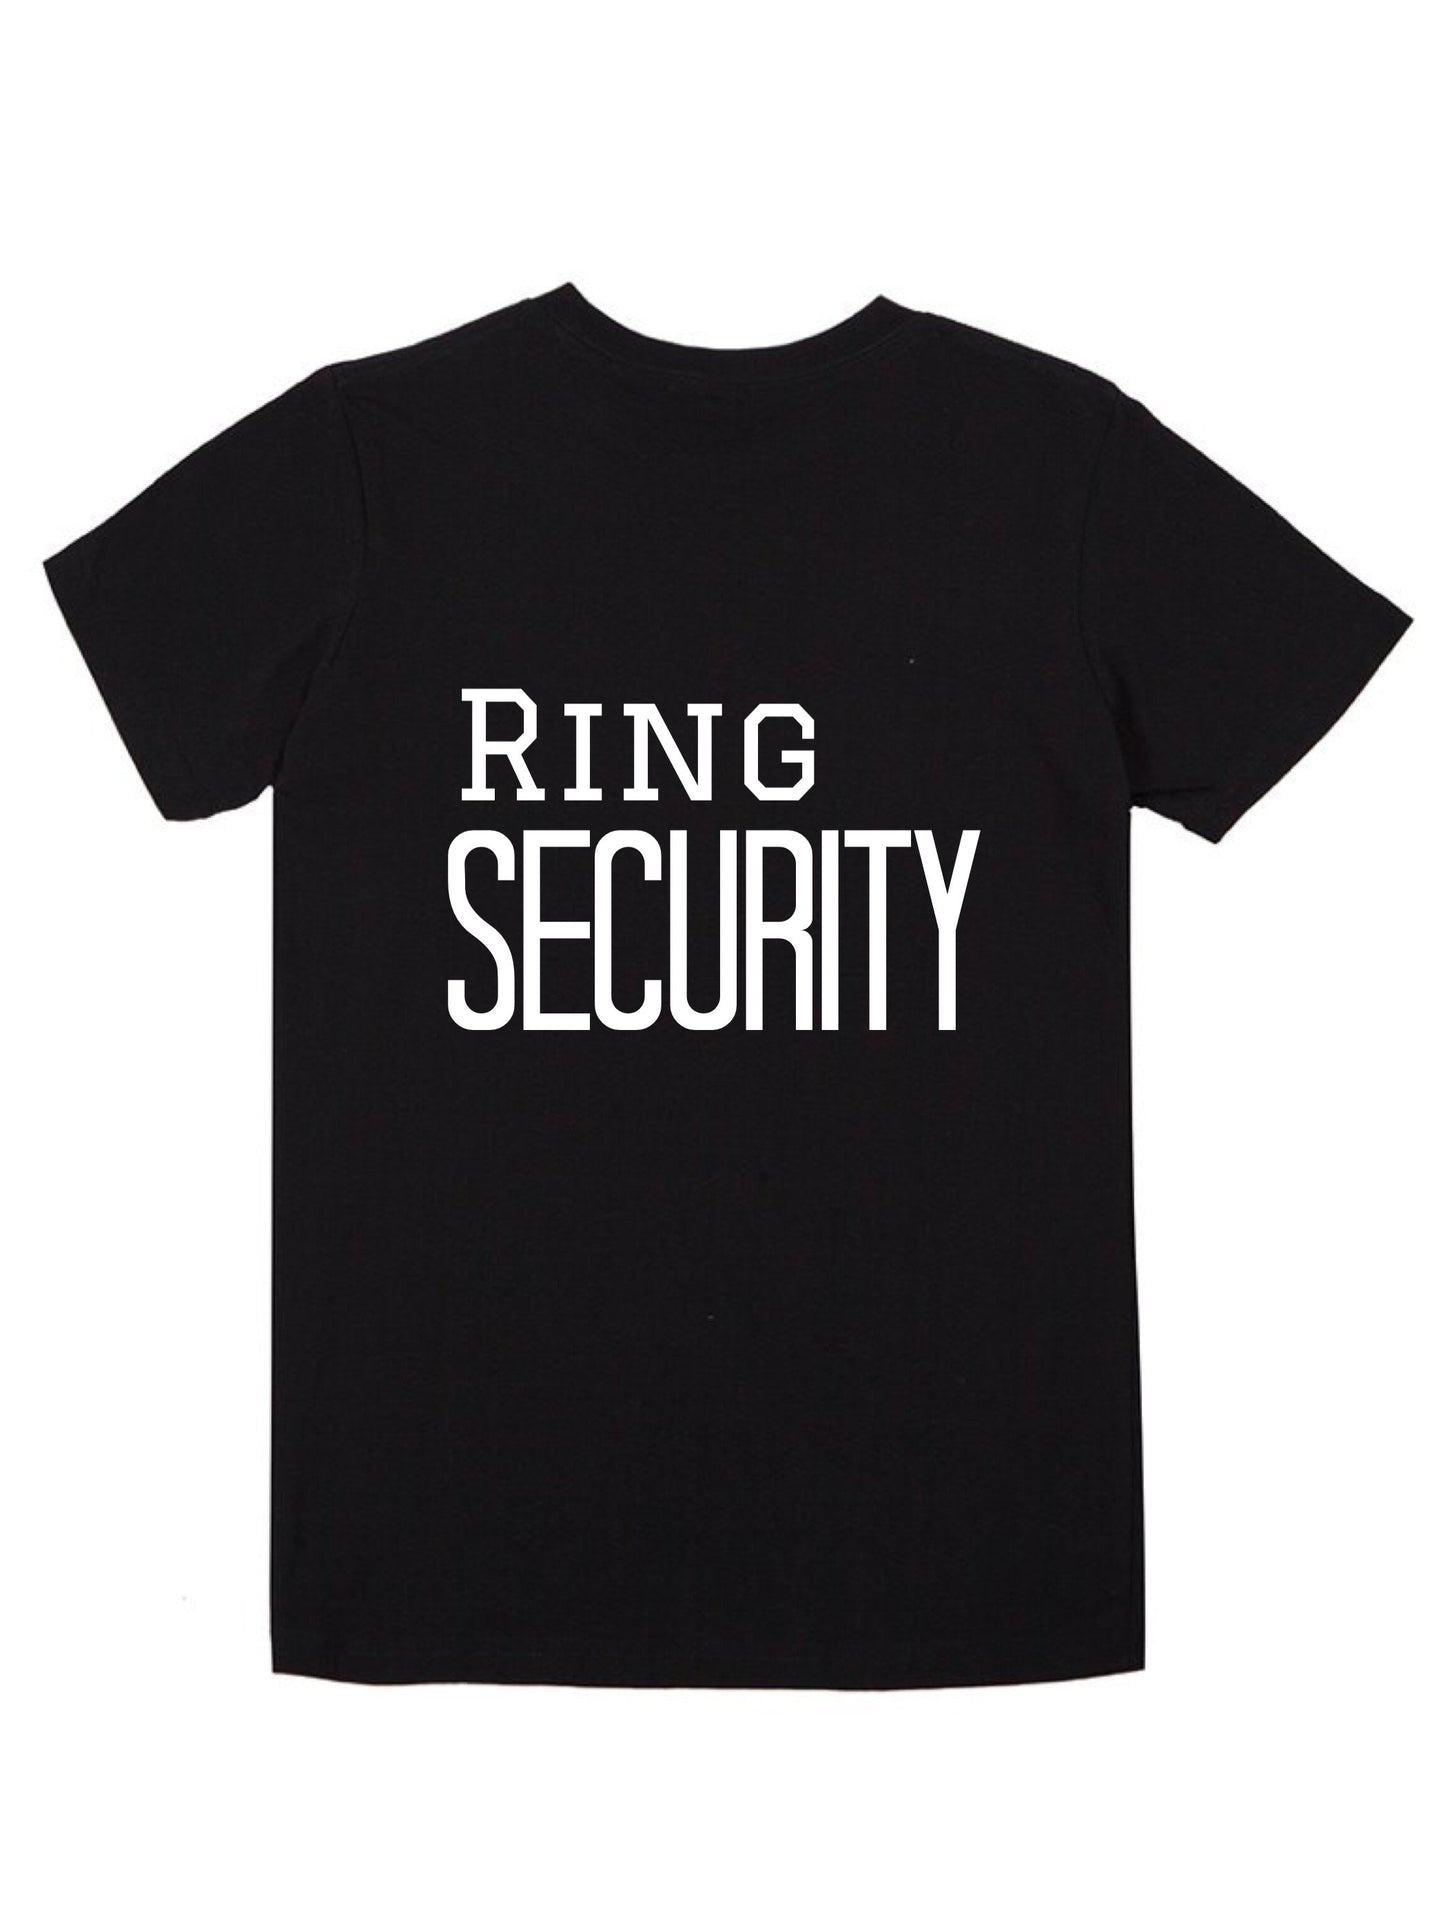 Ring security shirt| Petal Patrol shirt, ring barer shirt, ring guard shirt, wedding party gifts, miniature groom shirt, gift for ring boy